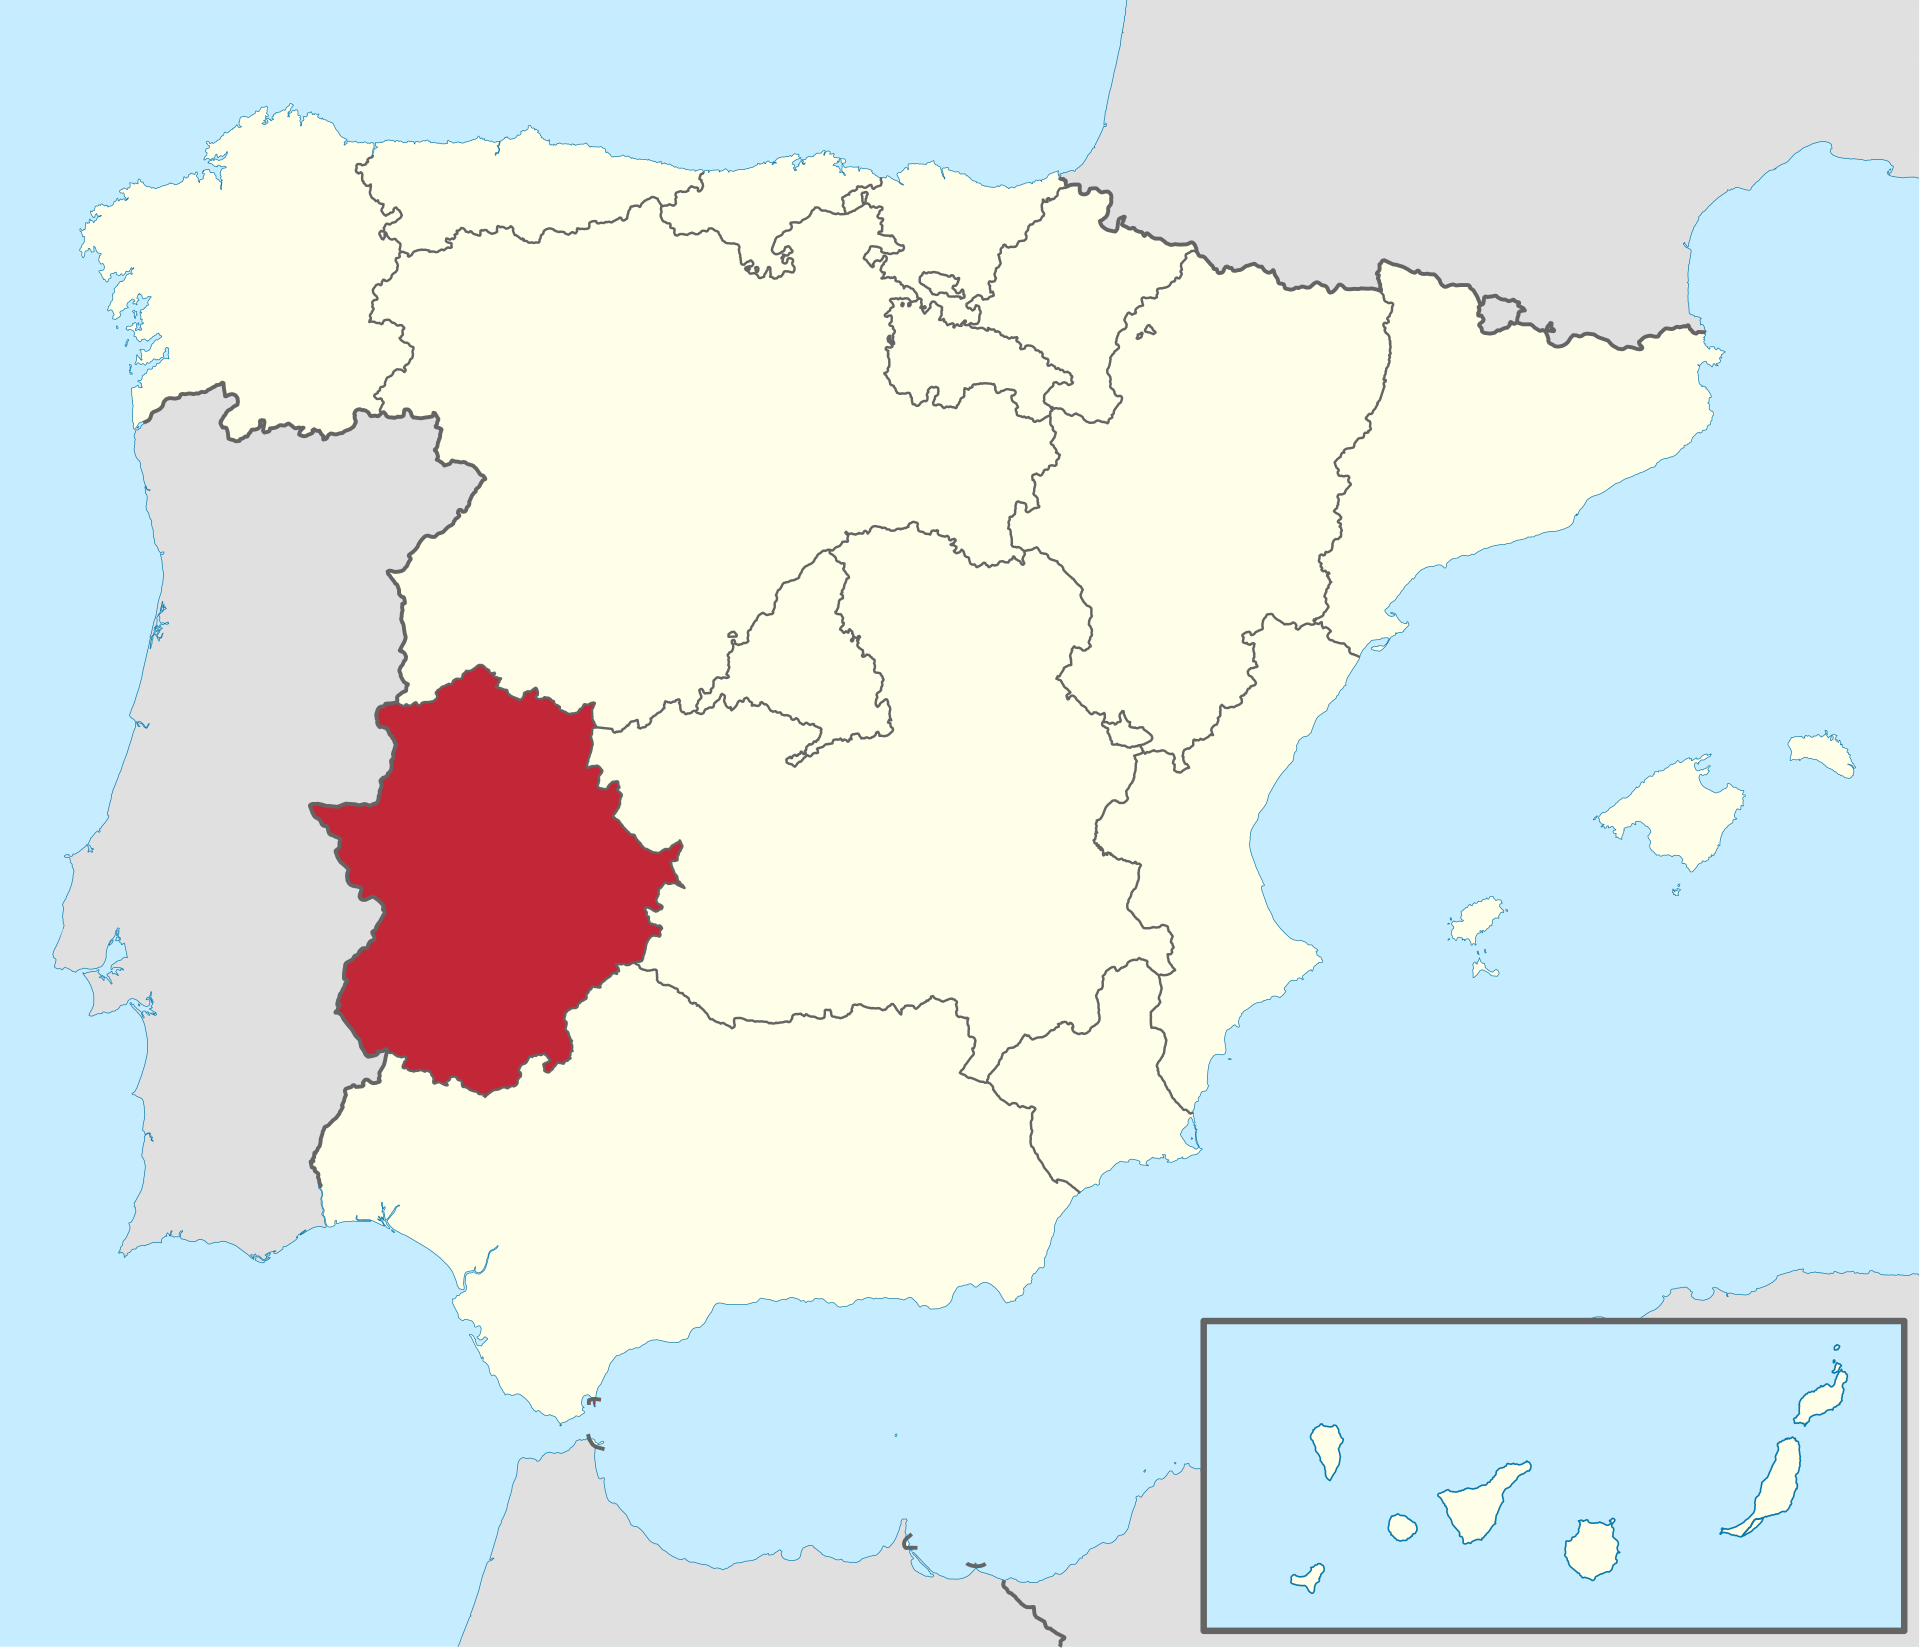 Hotel Milenial Urbex locatie in of rond de regio Extremadura (Badajoz), Spain